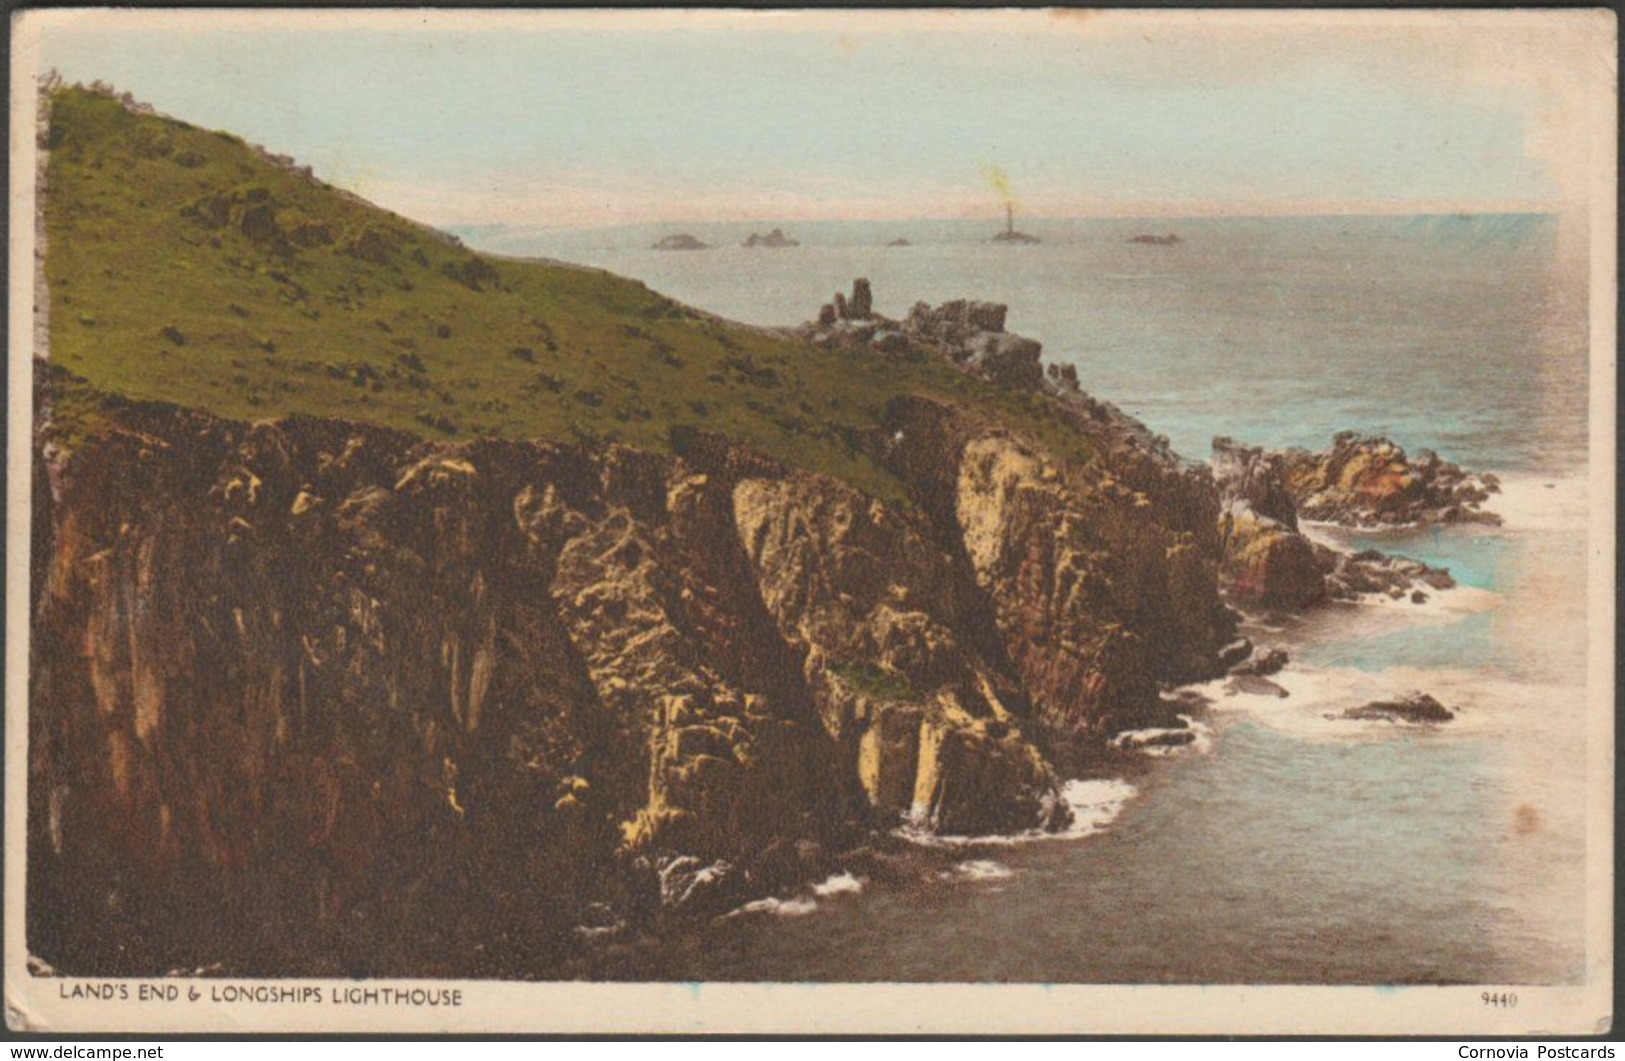 Land's End & Longships Lighthouse, Cornwall, 1948 - Postcard - Land's End